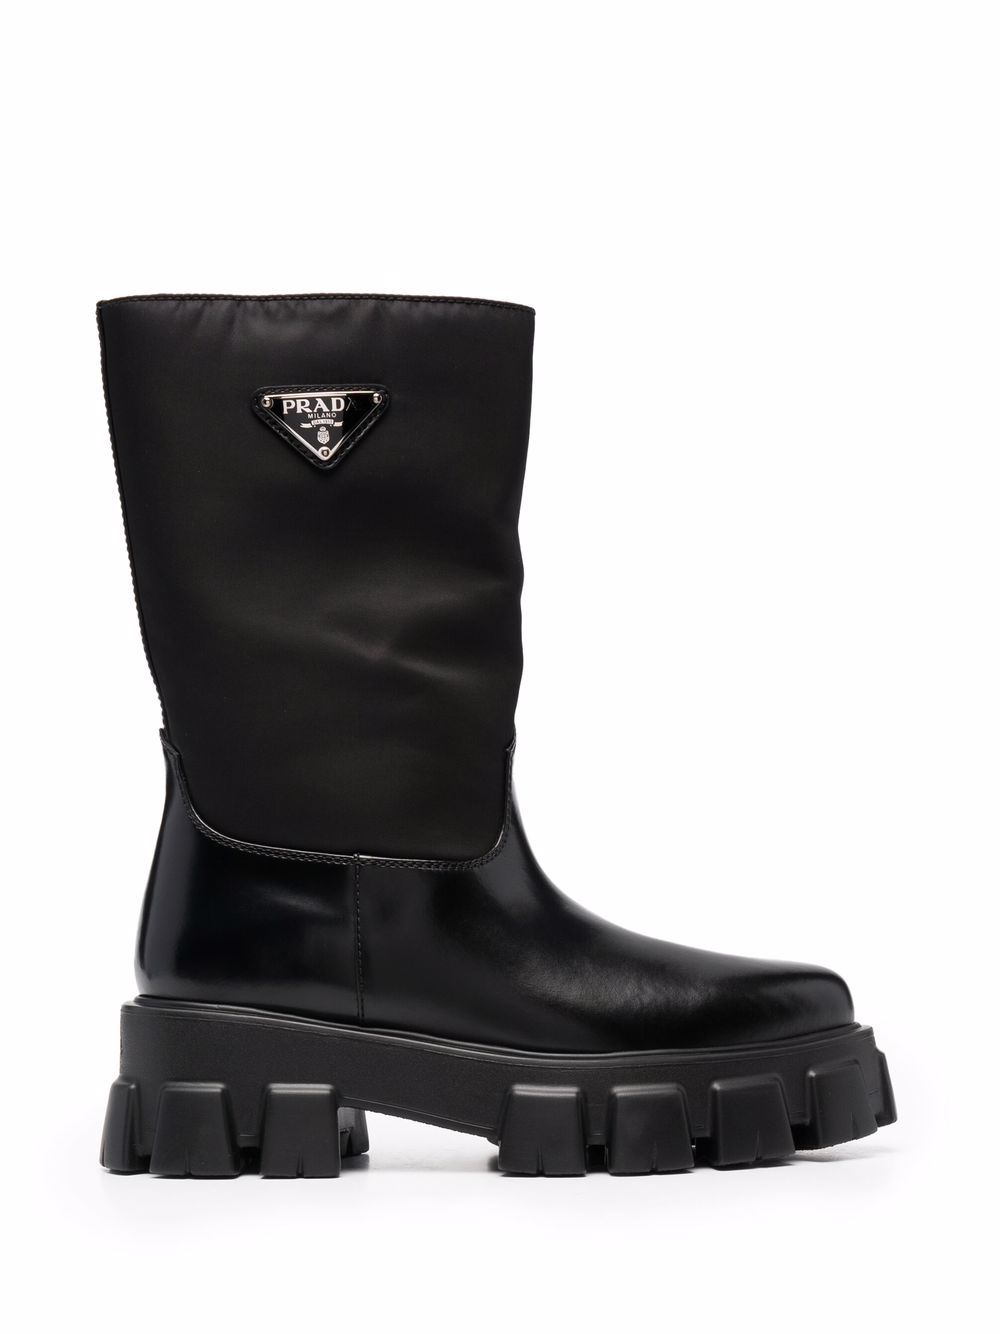 Logo Leather Ankle Boots дамски обувки Prada 841155378_35